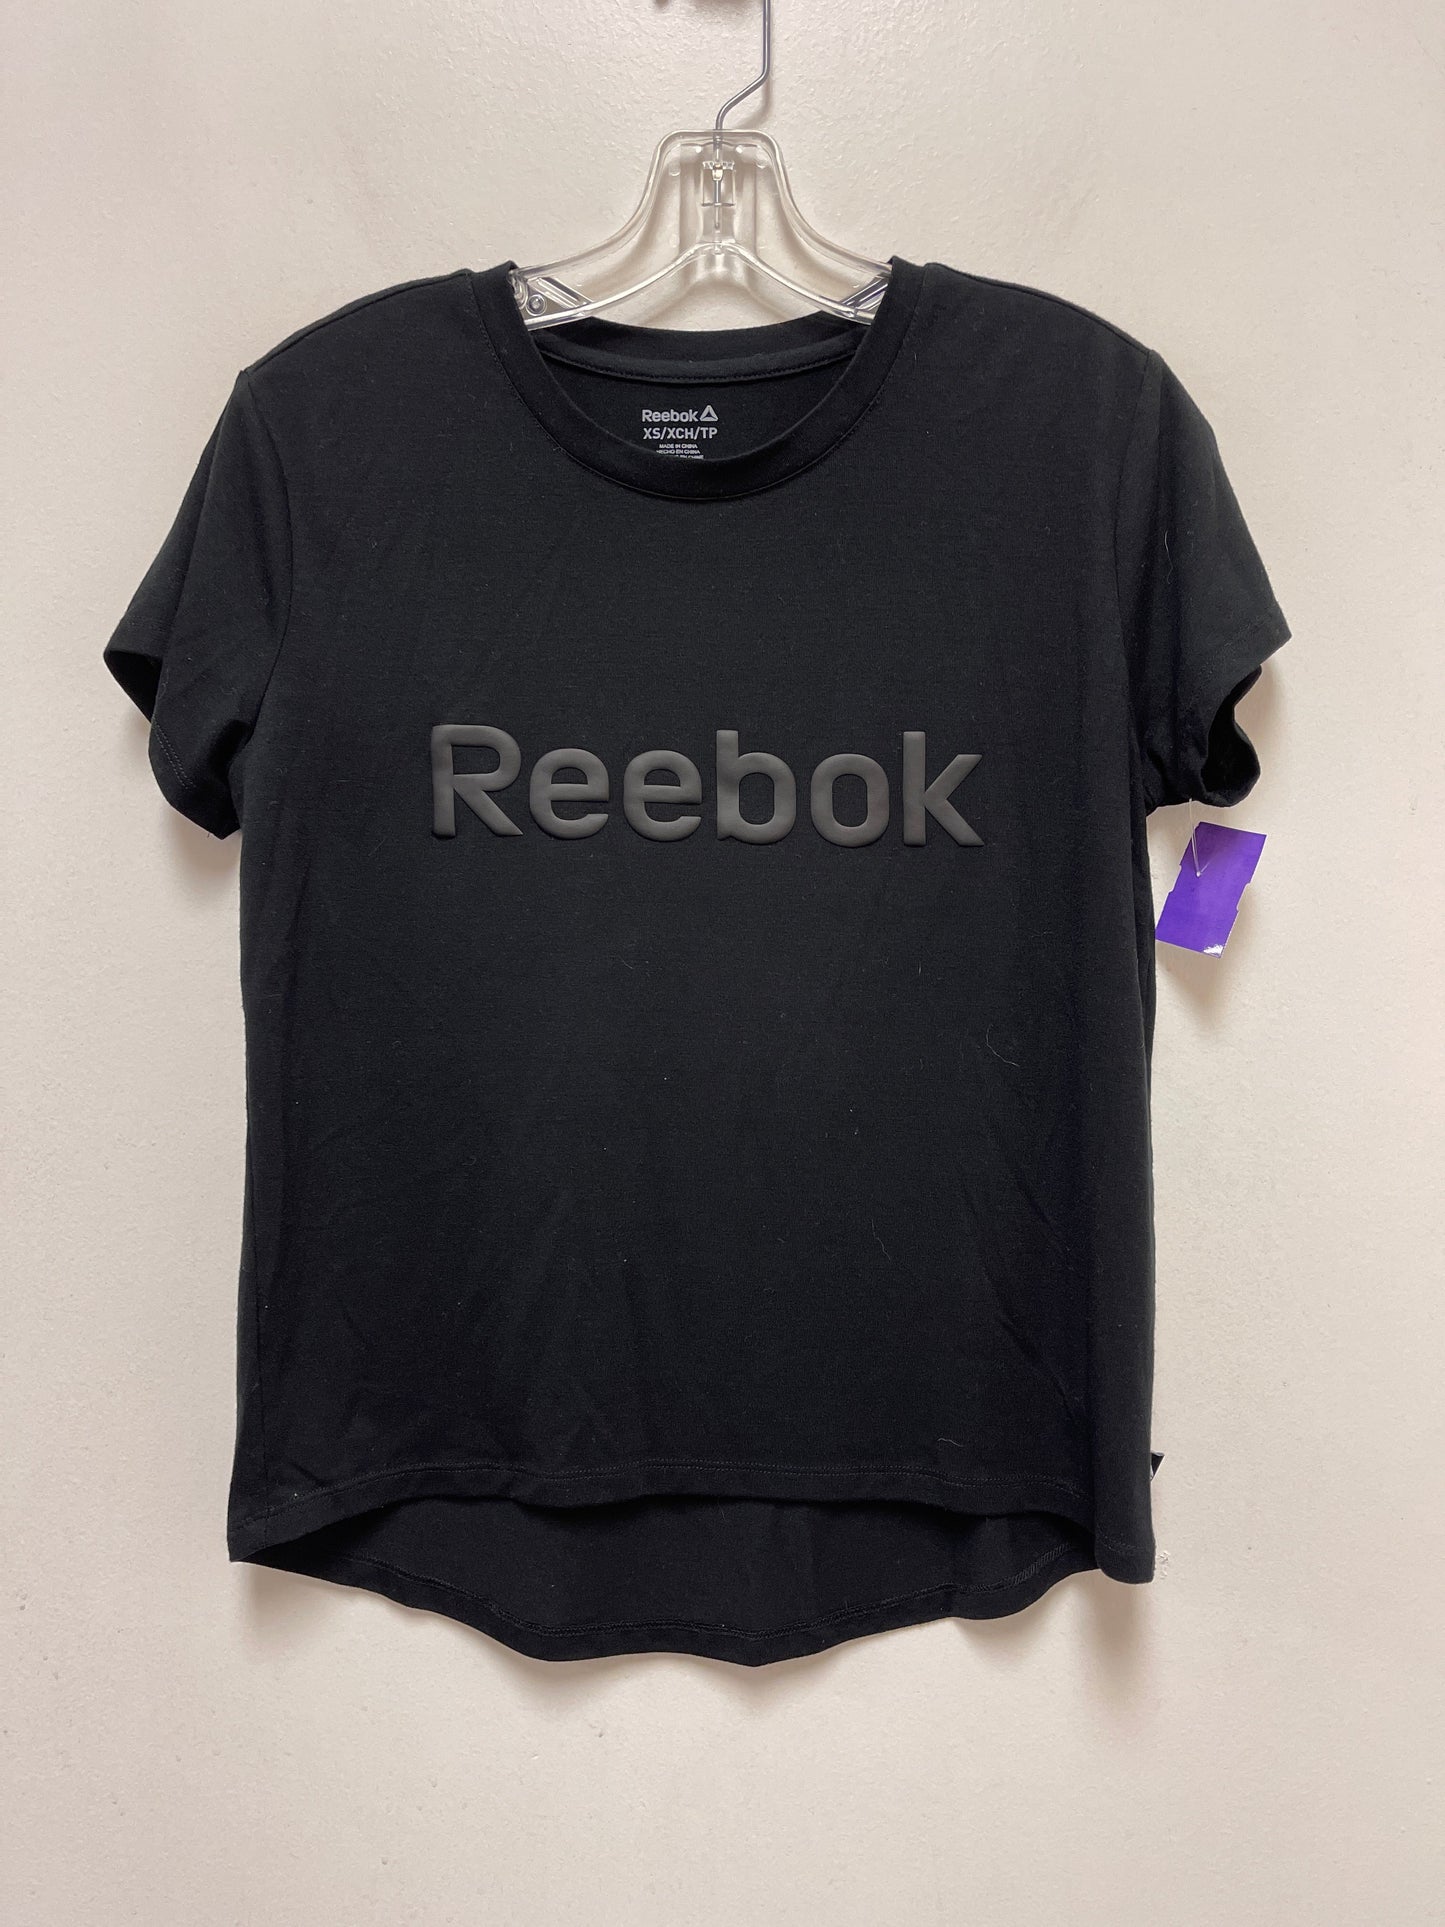 Black Athletic Top Short Sleeve Reebok, Size Xs